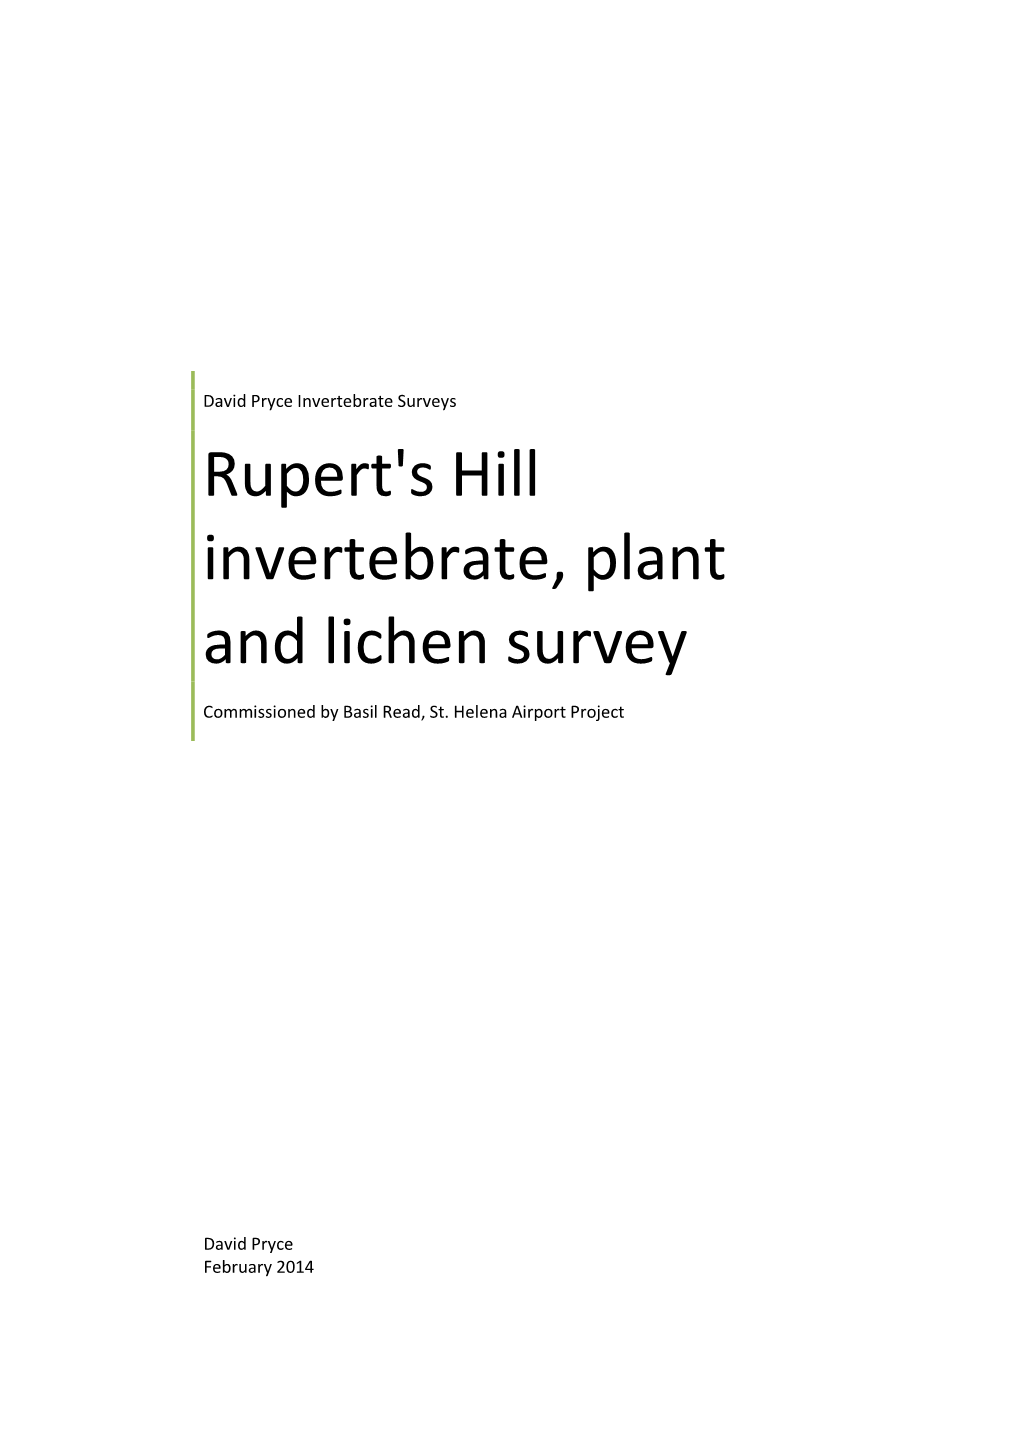 Rupert's Hill Invertebrate, Plant and Lichen Survey